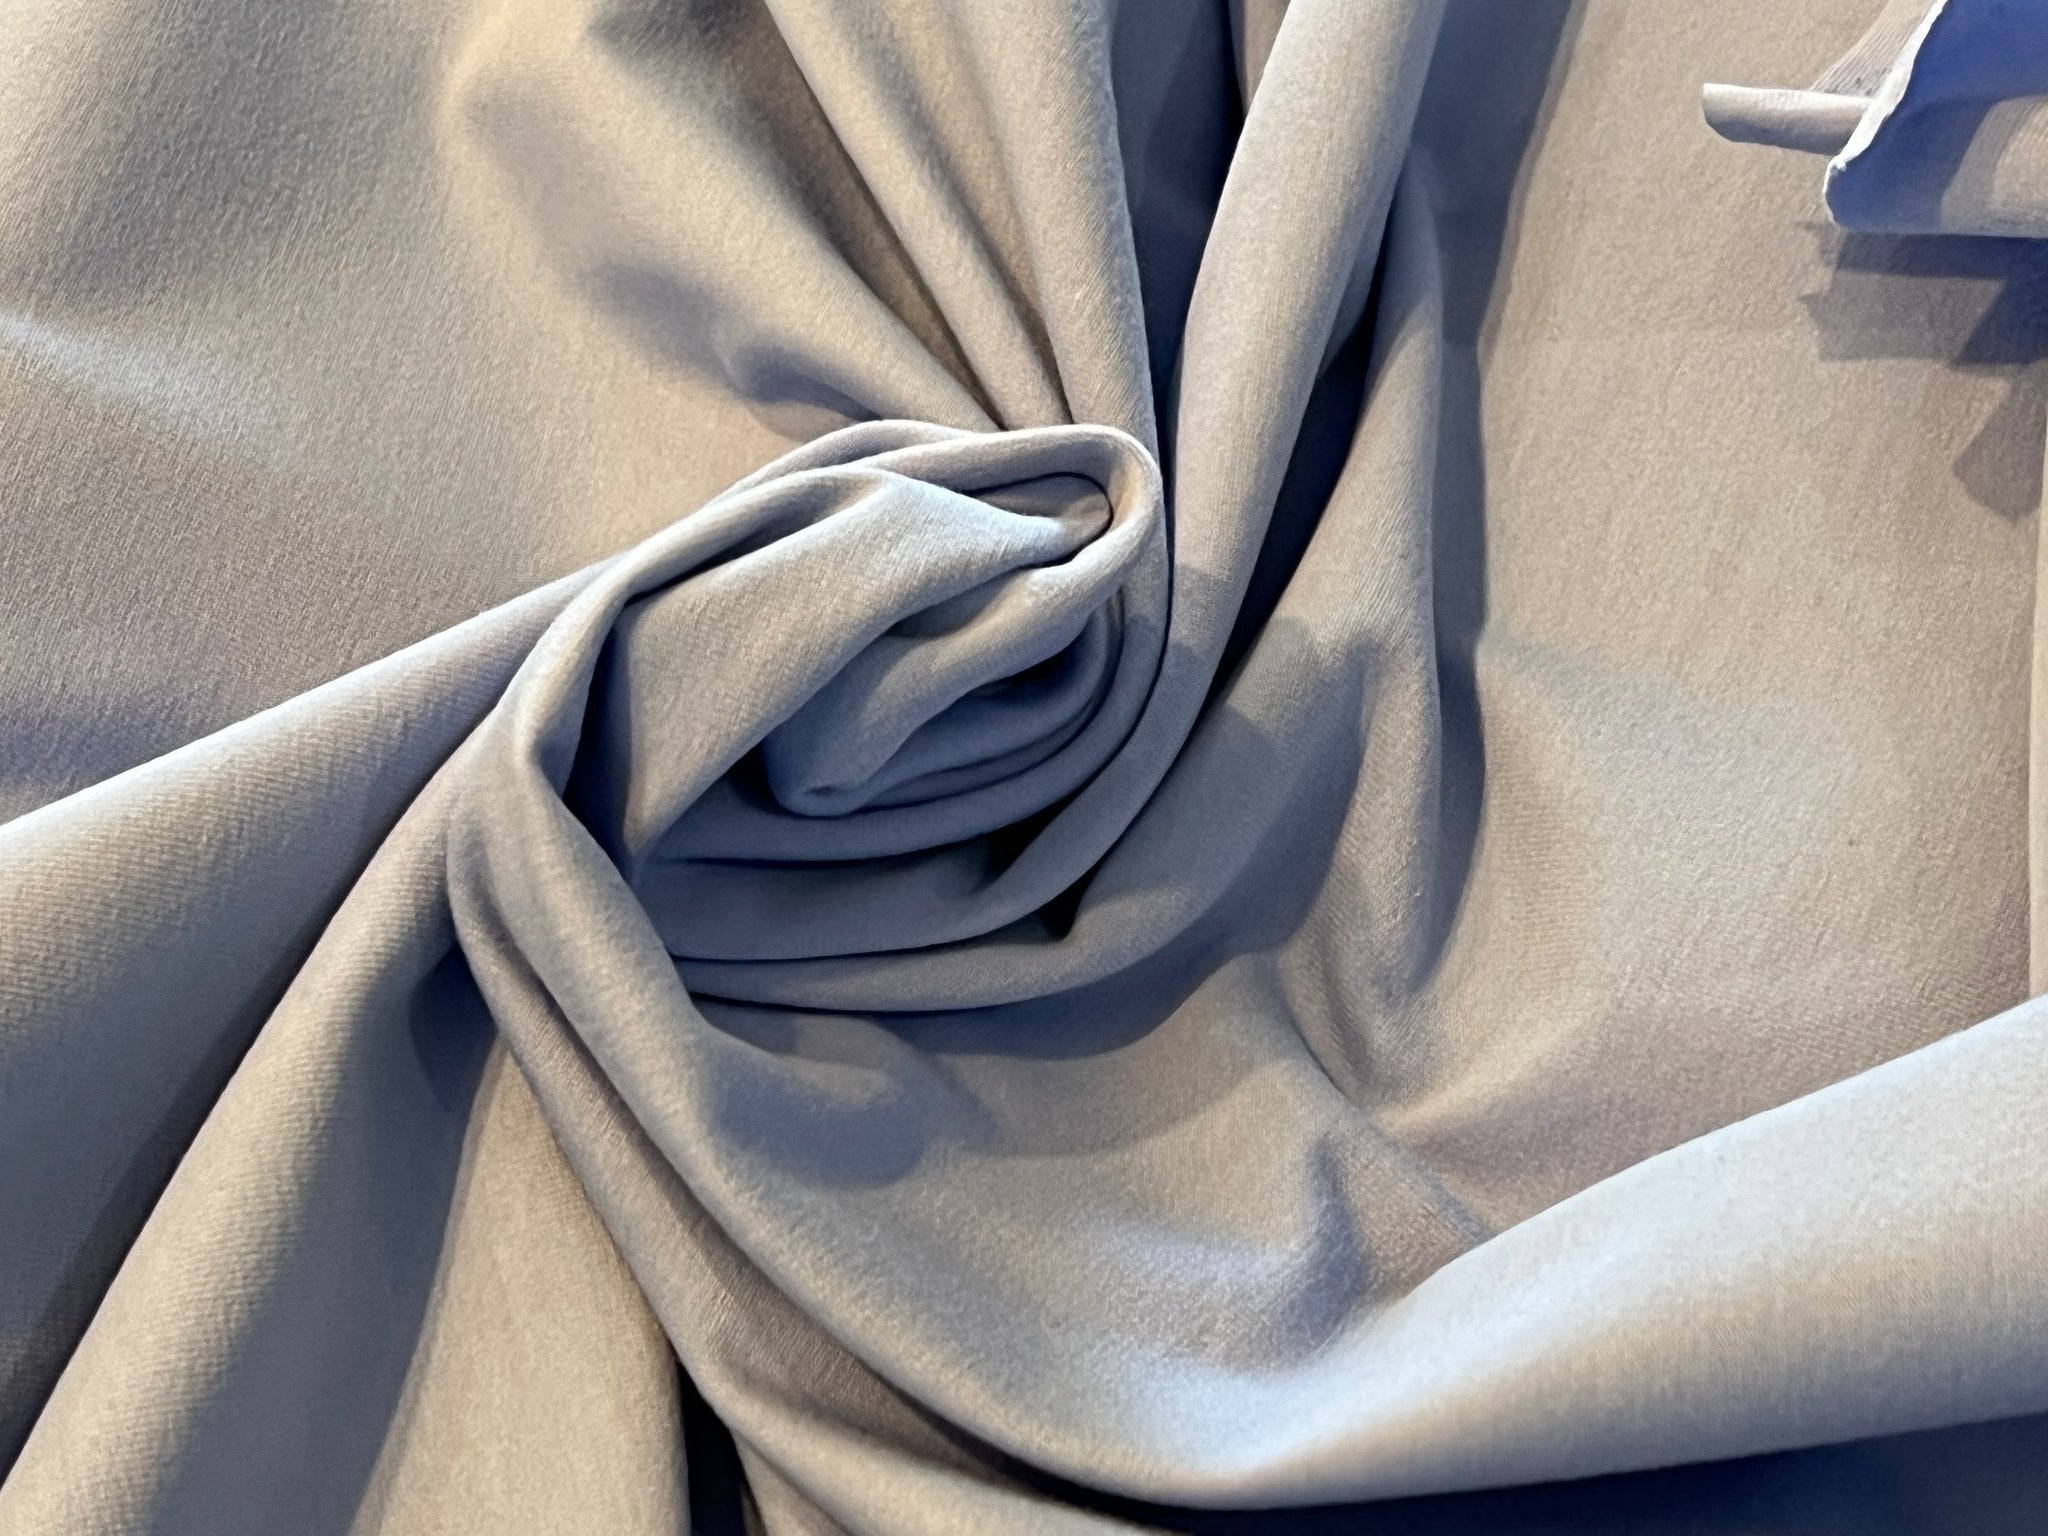 Cotton Satin Fabric (95% Cotton - 5% Elastane) Weight 180g Tessuti